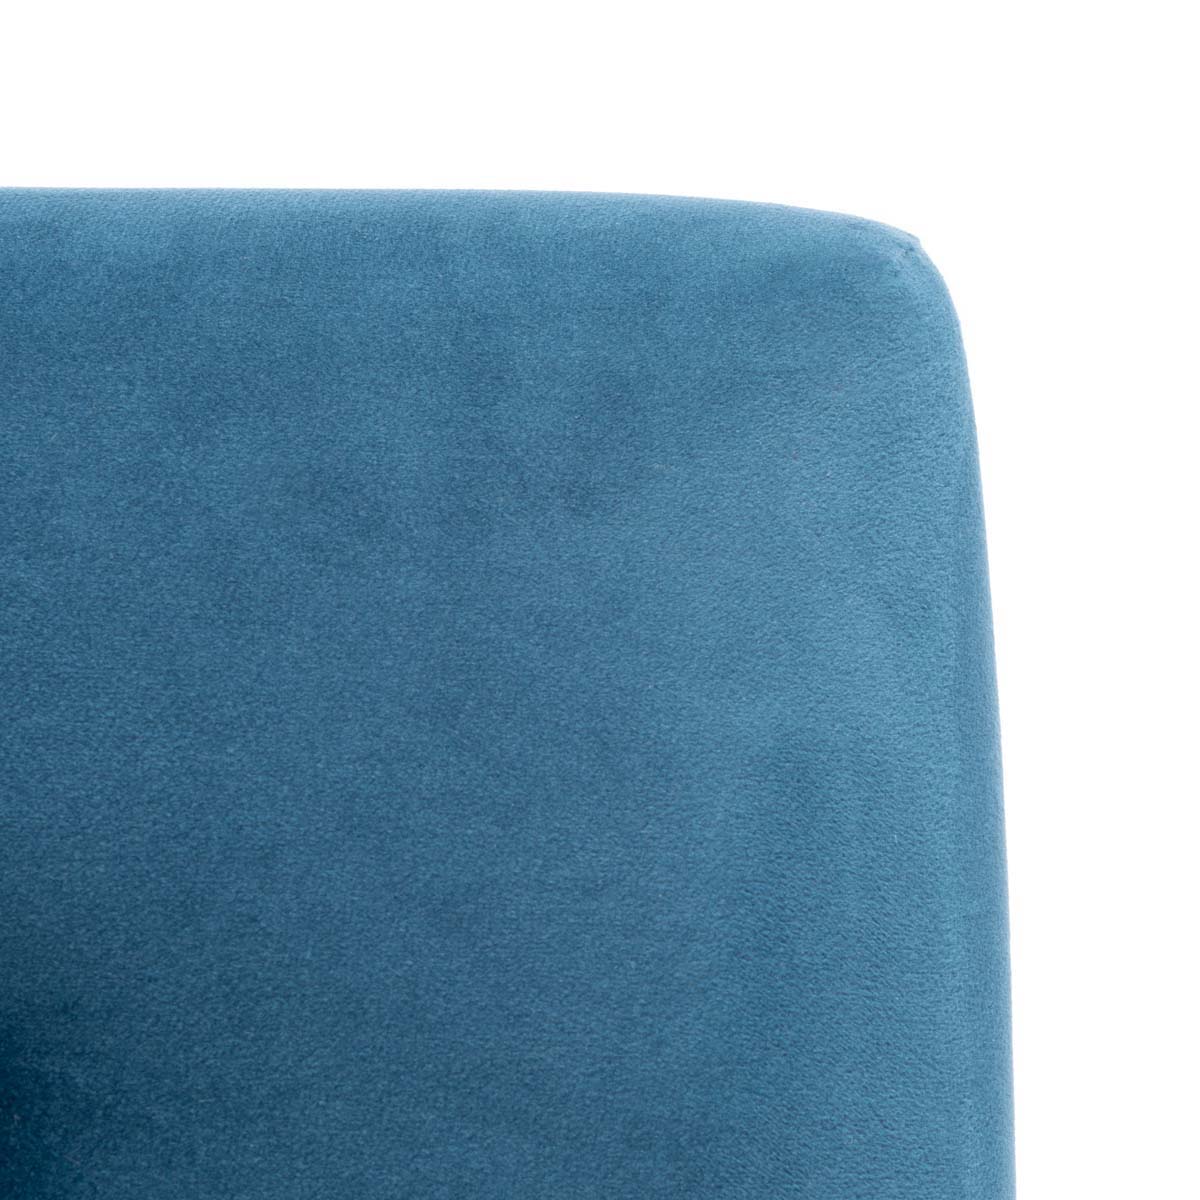 Safavieh Roald Sofa Accent Chair , ACH6209 - Prussian Blue / Antique Coffee